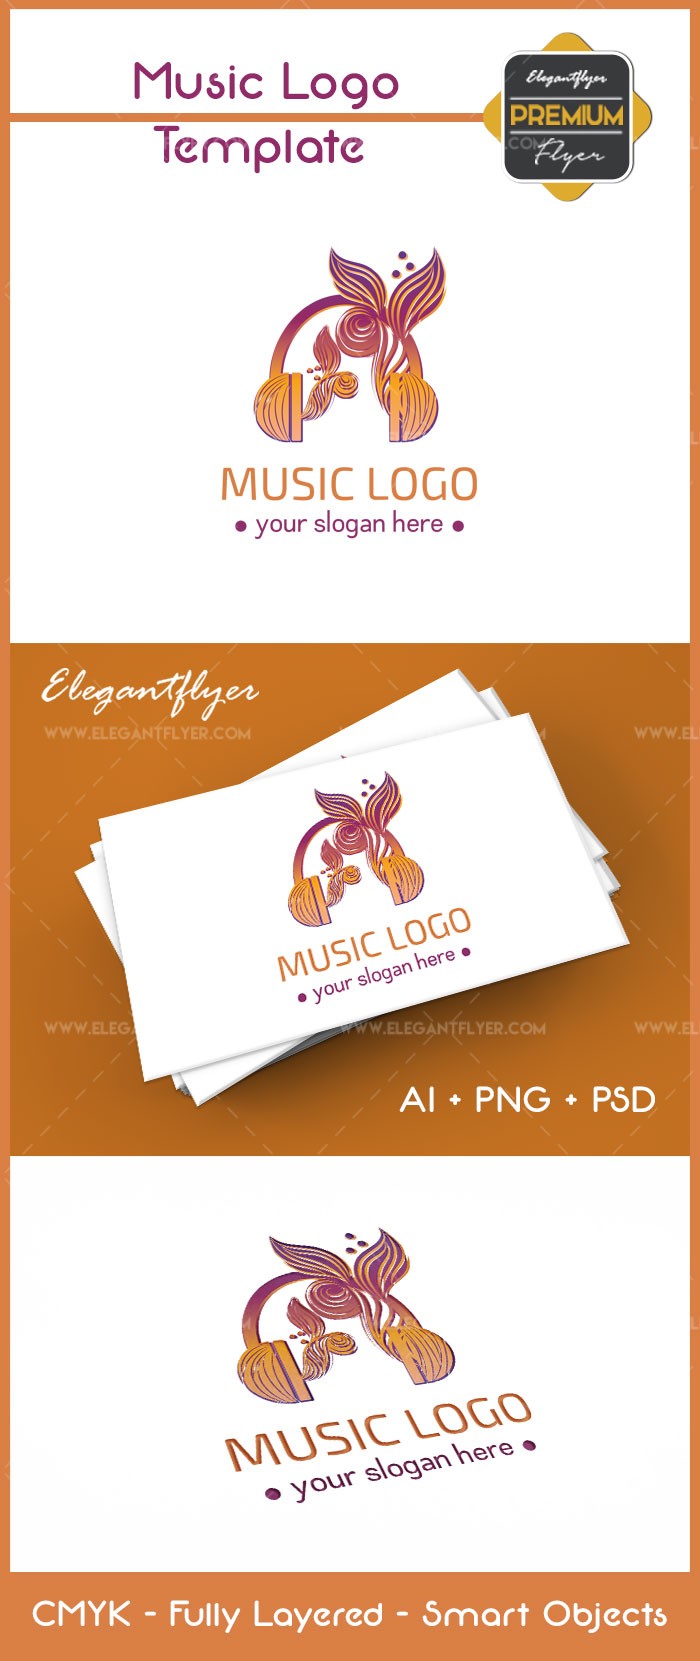 Logo de música by ElegantFlyer